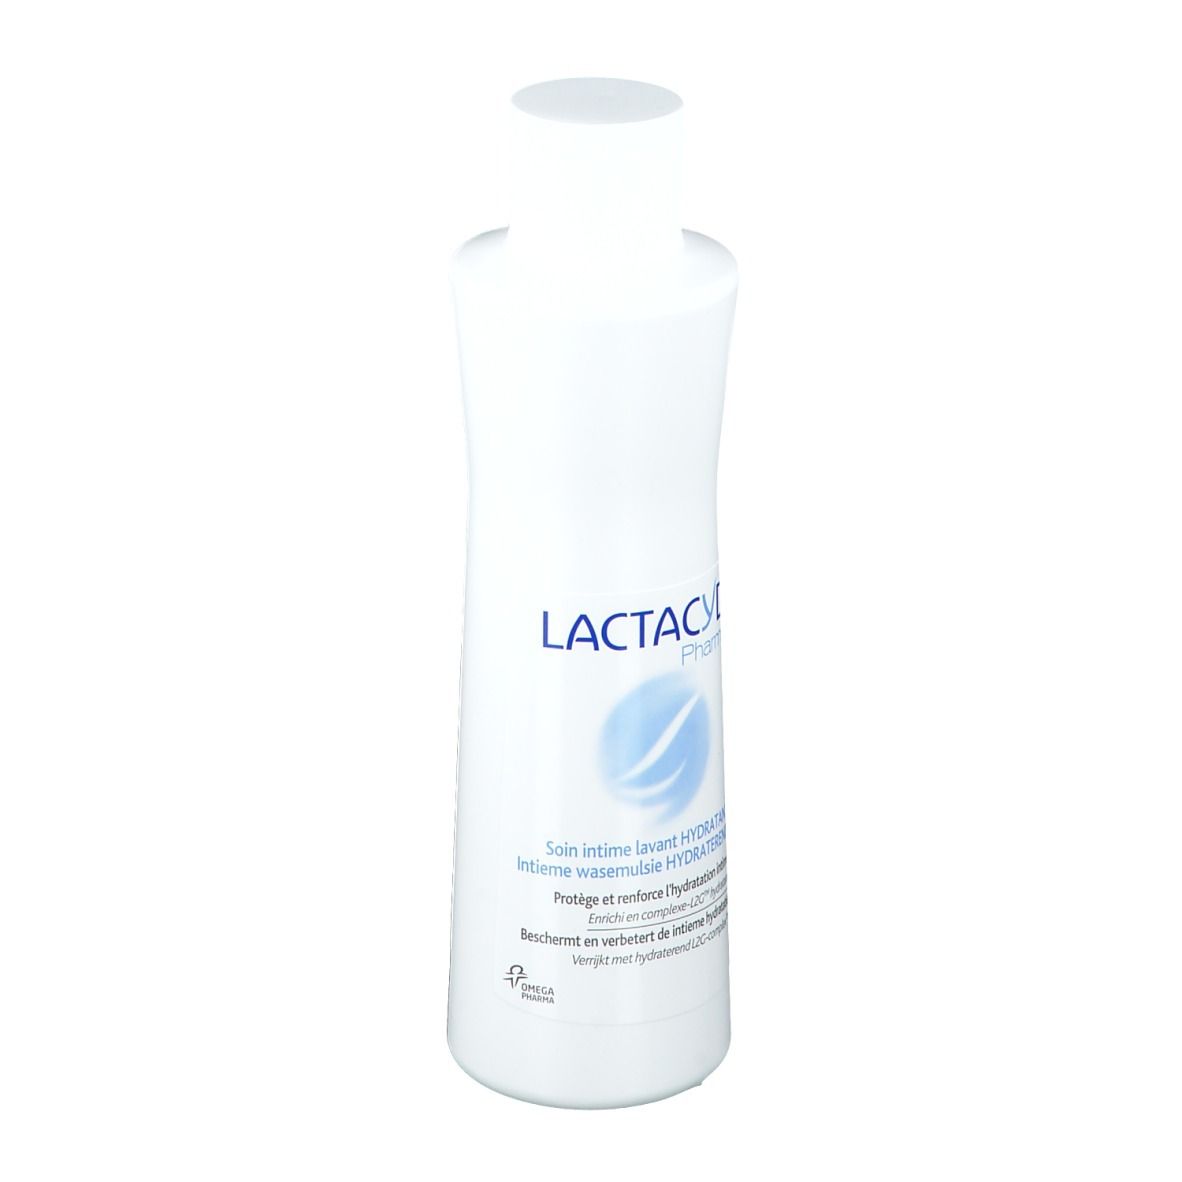 Lactacyd Pharma Hydratant